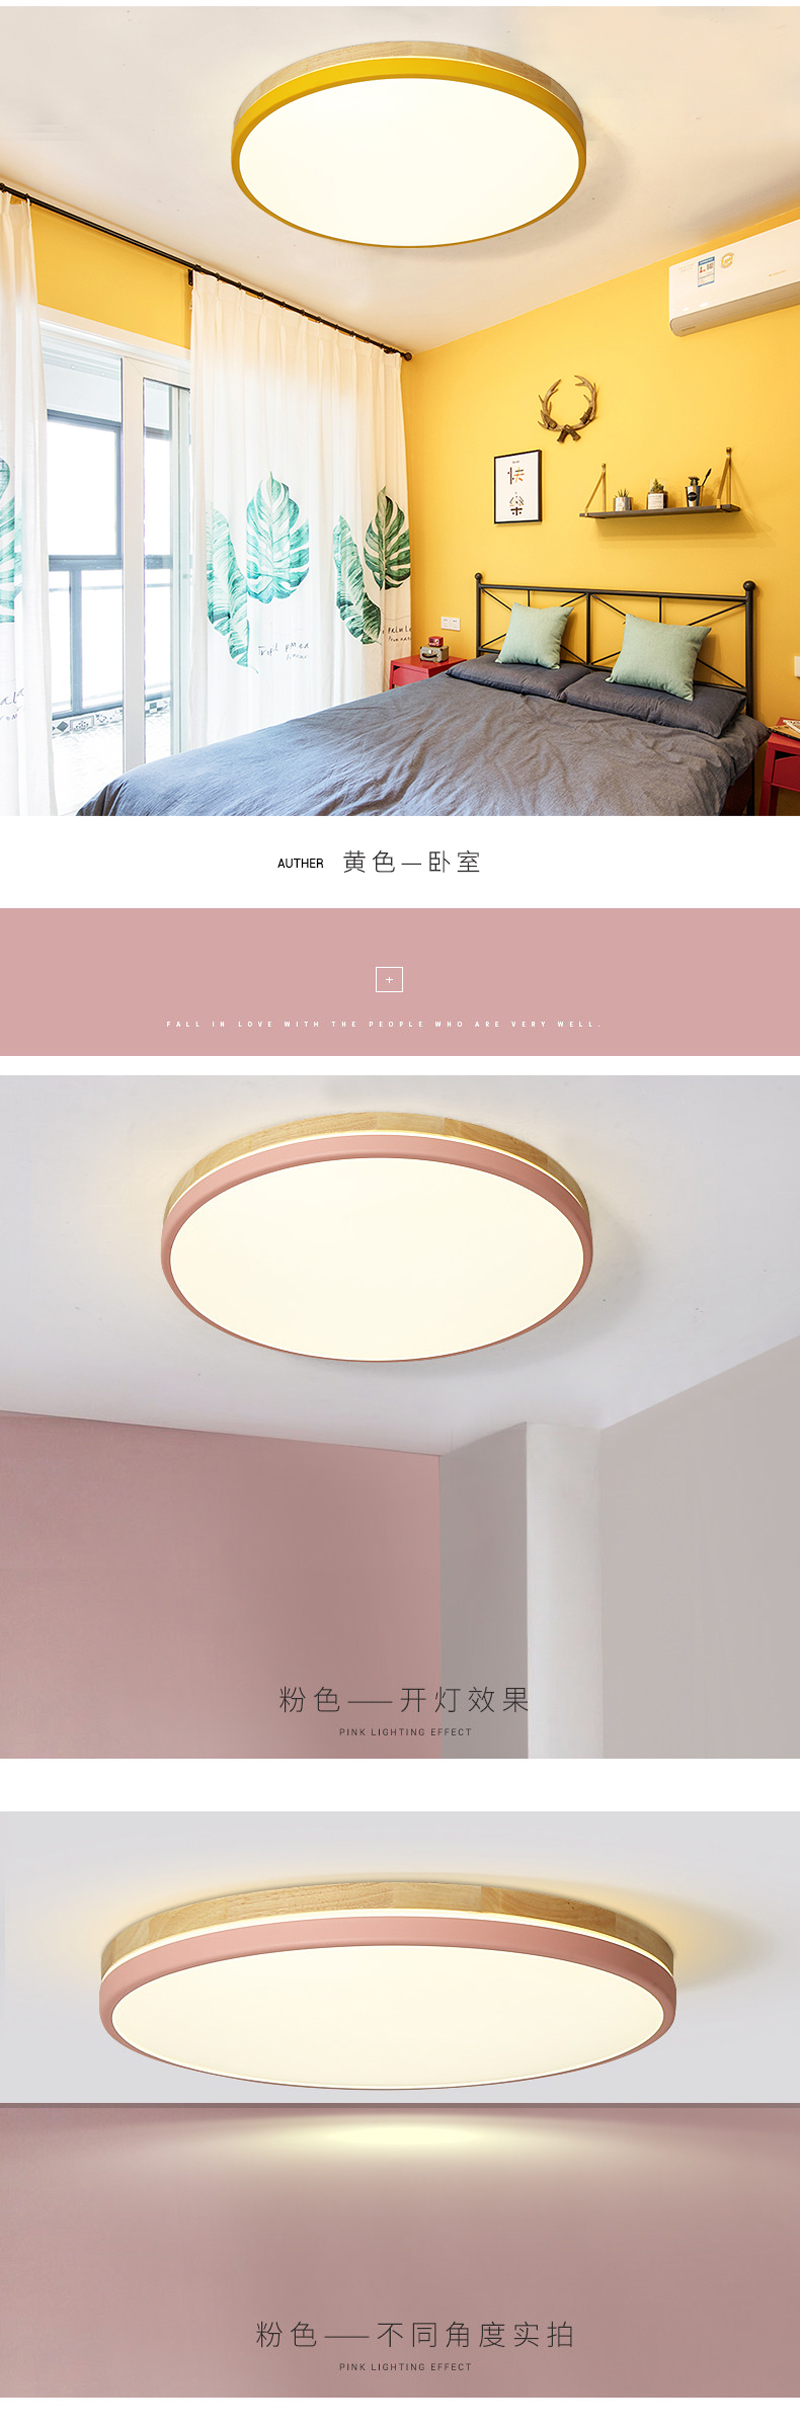 LED Lighting Home Decorative LED Celling Lamp Wooden LED Light